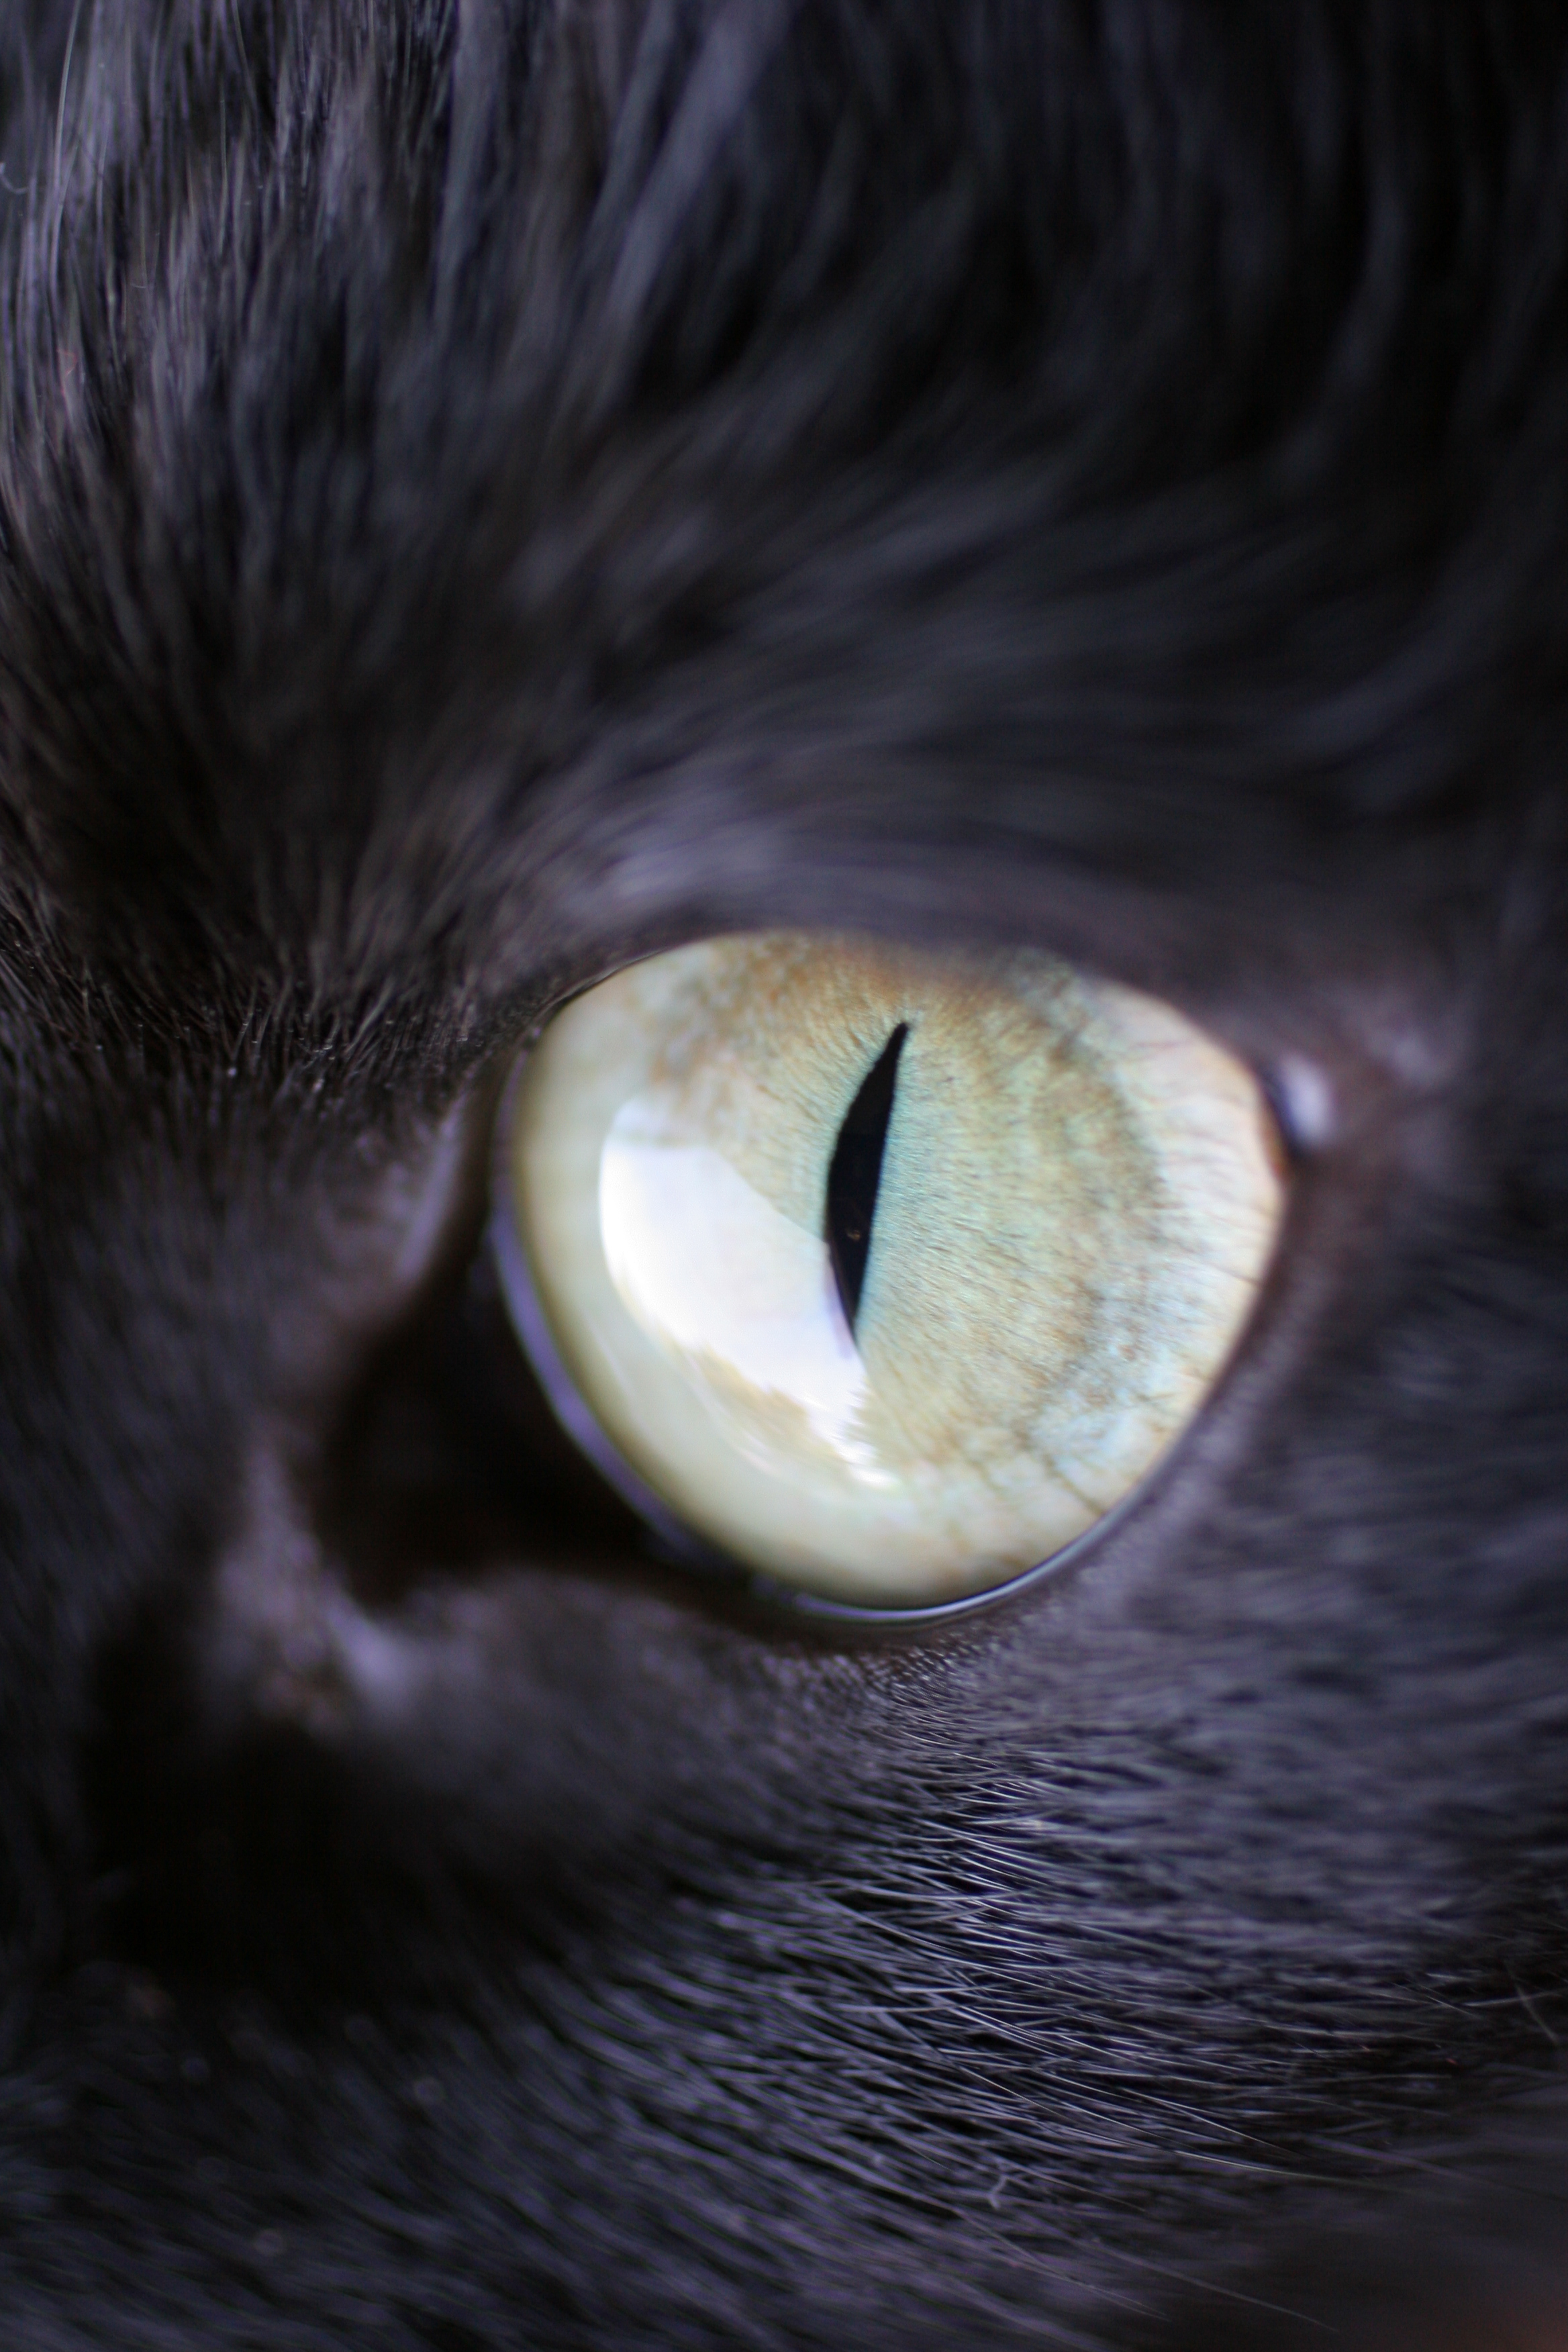 Cat Eye Images